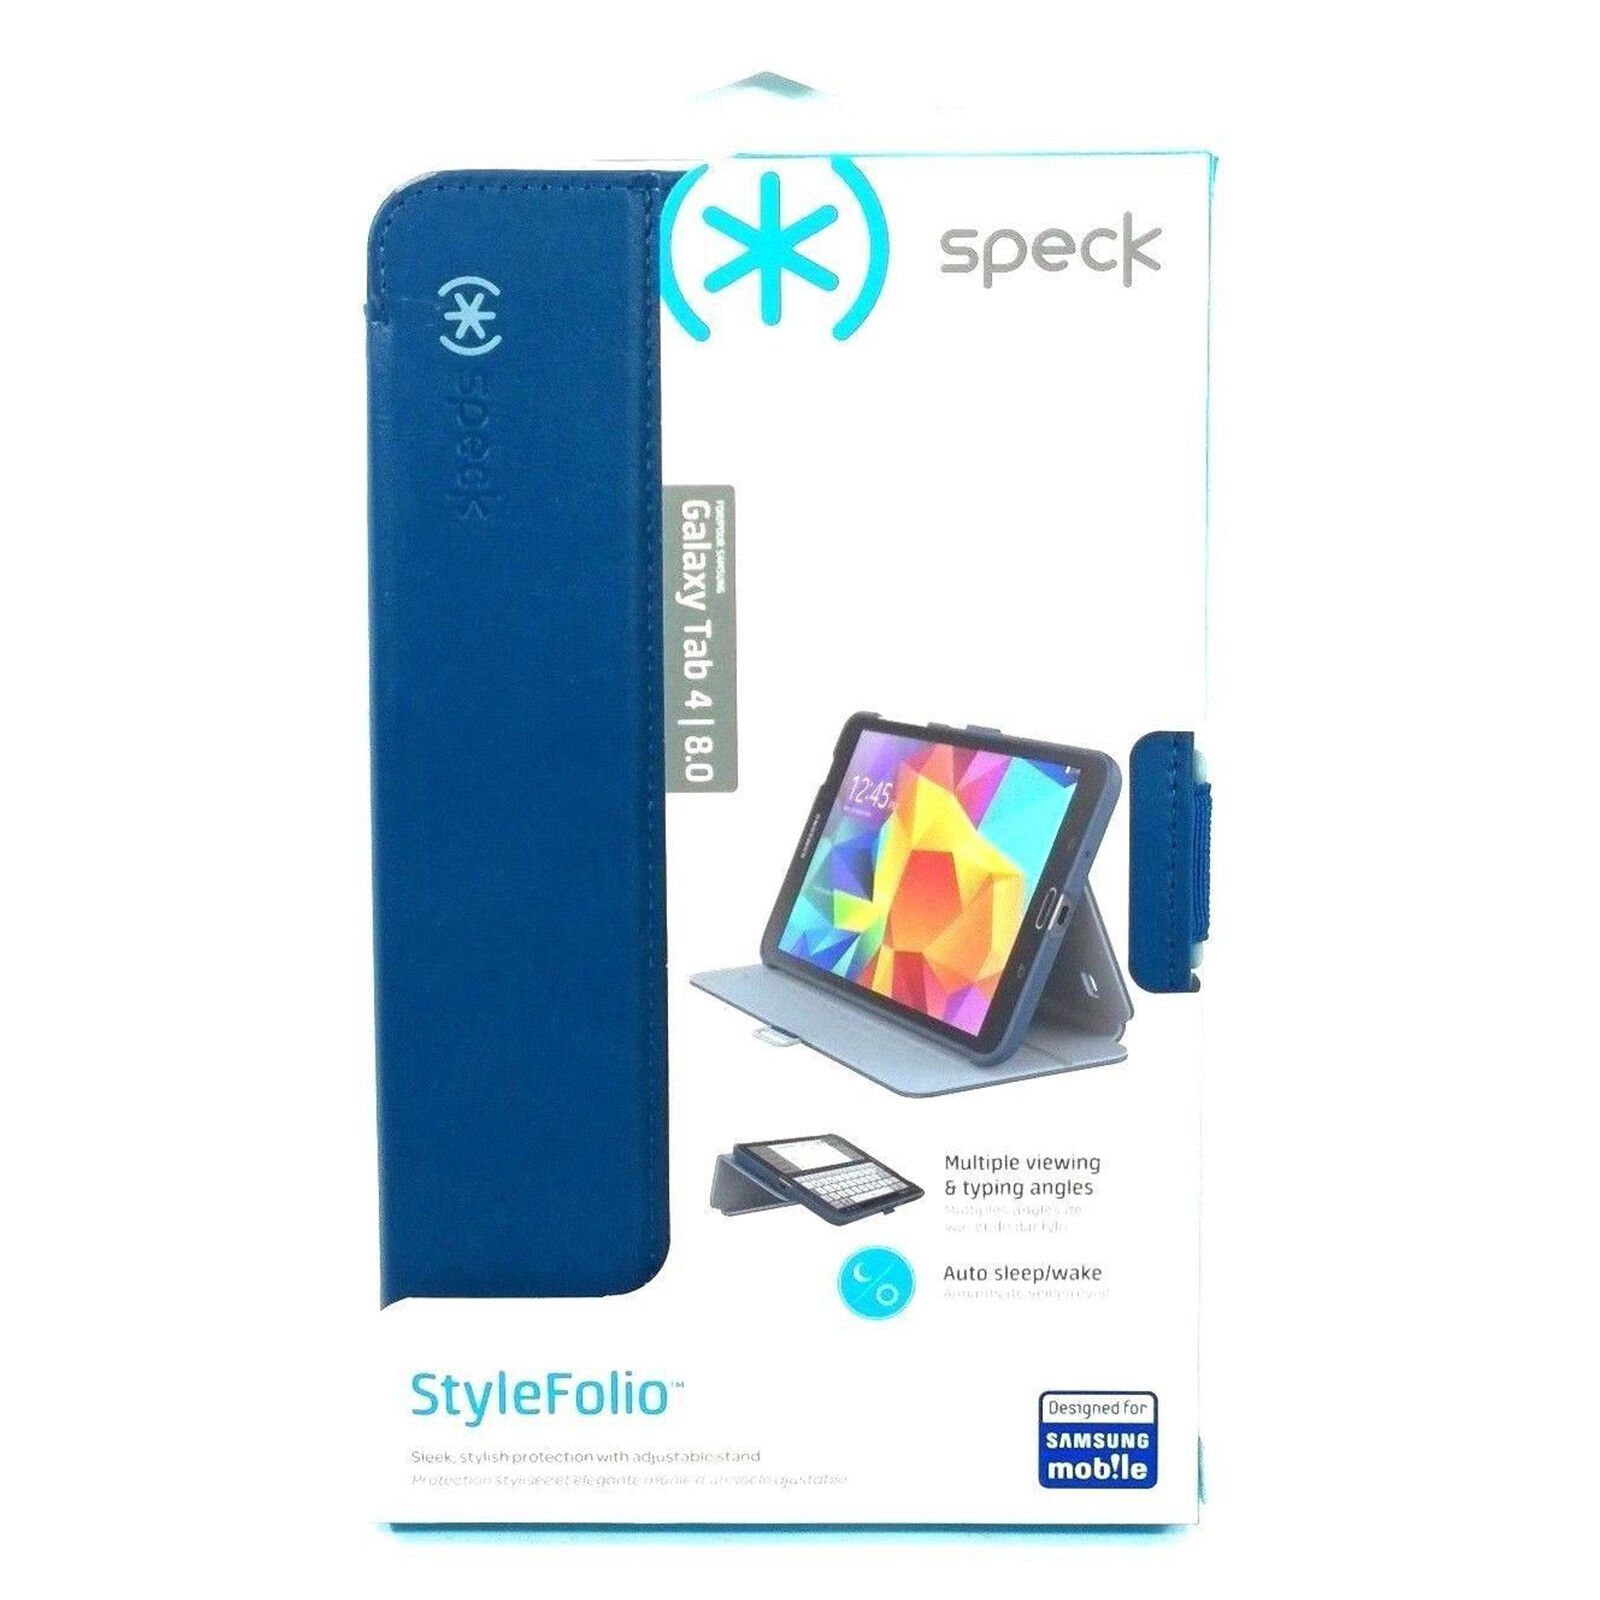 Speck StyleFolio Stylish Impact Protection Folio Case For Samsung Galaxy Tab 4